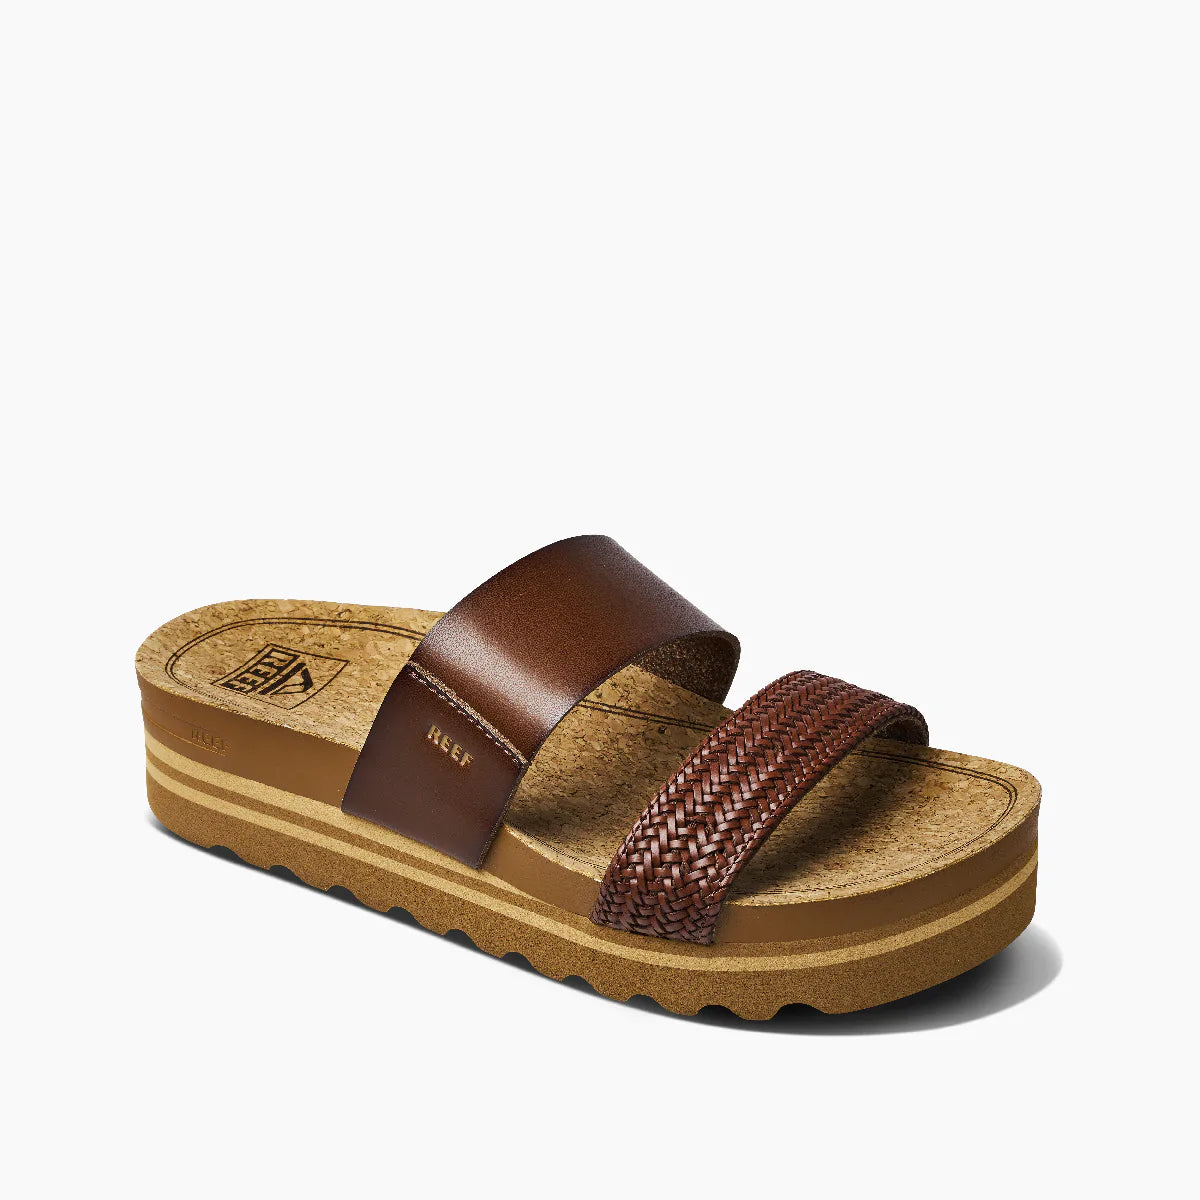 Reef Cushion Vista Hi Sandals - Chocolate Womens Footwear